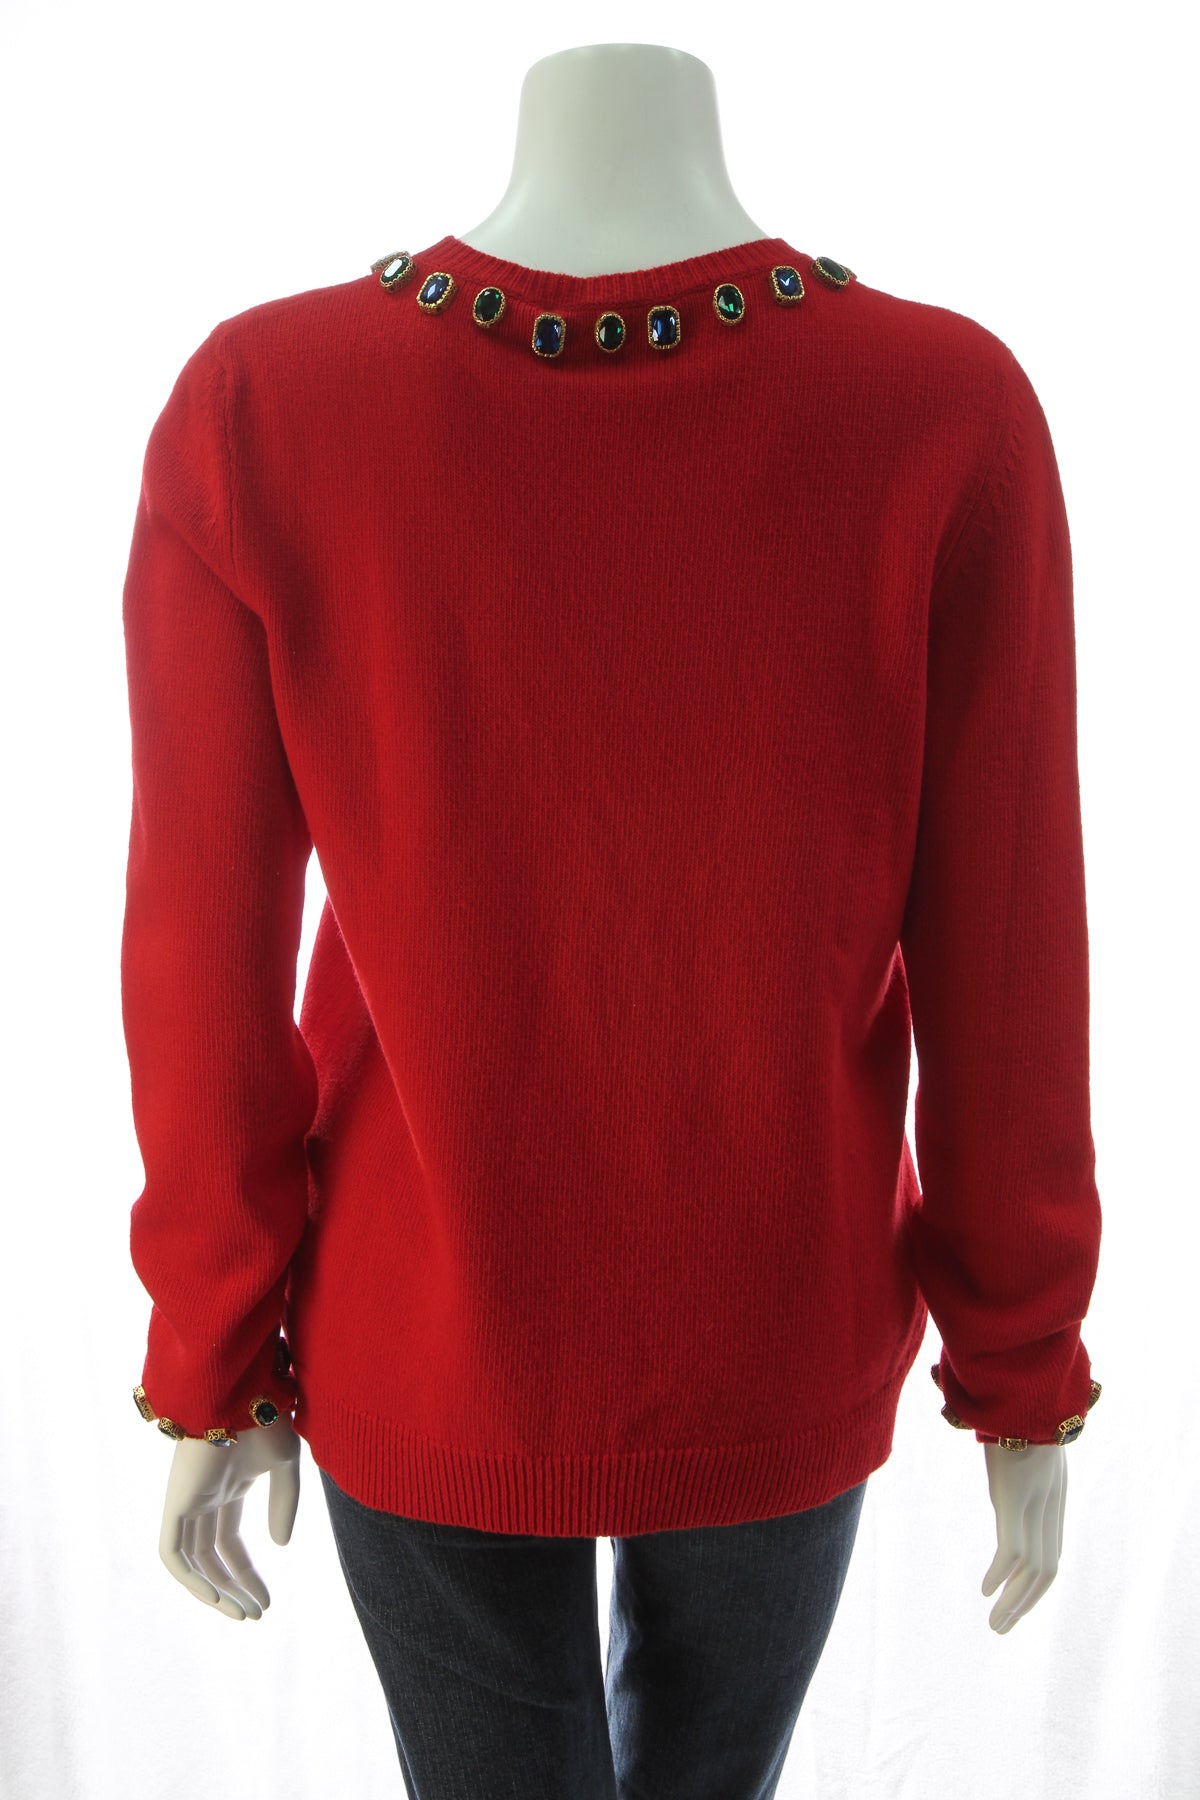 Louis Vuitton knit sweater size M Dm me offers